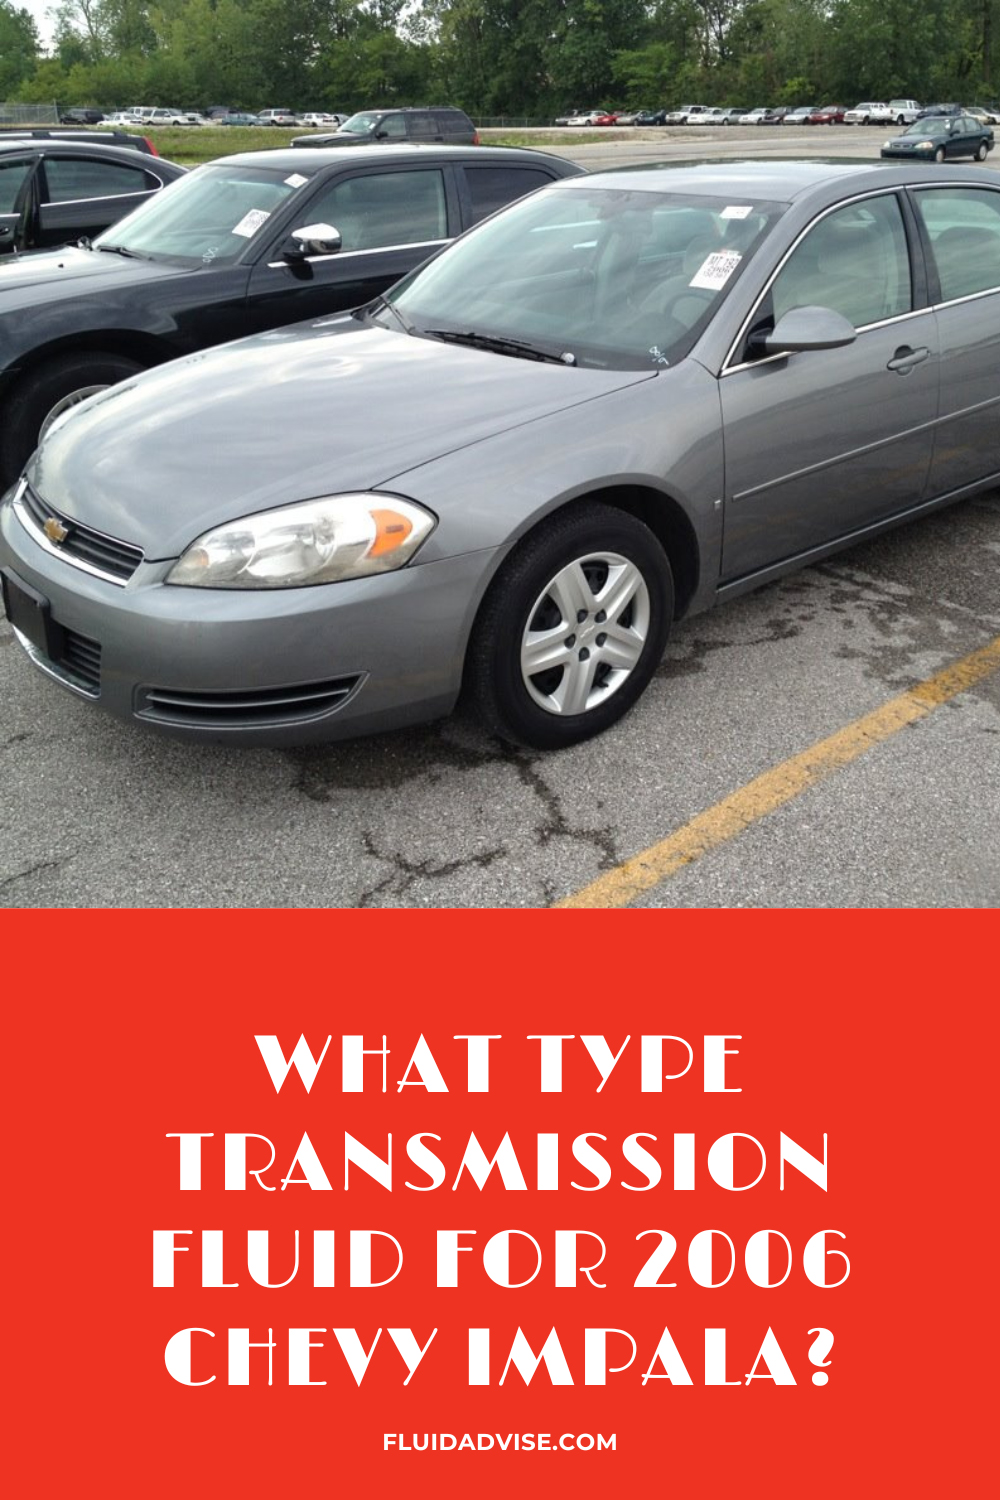 2006 Chevy Impala Transmission Fluid Type